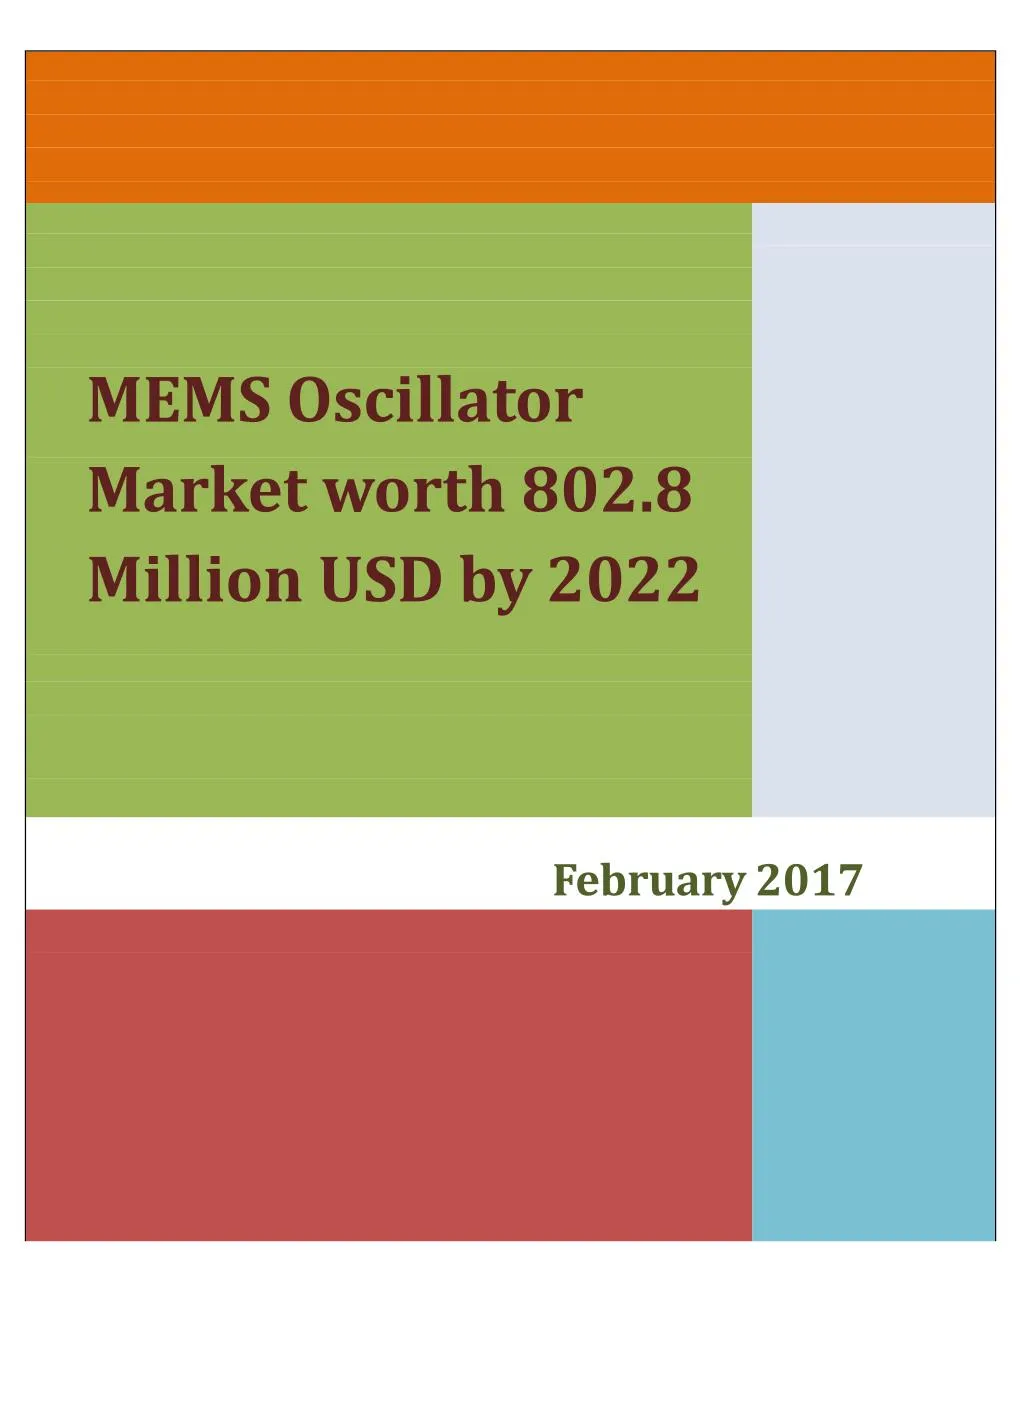 mems oscillator market worth 802 8 million